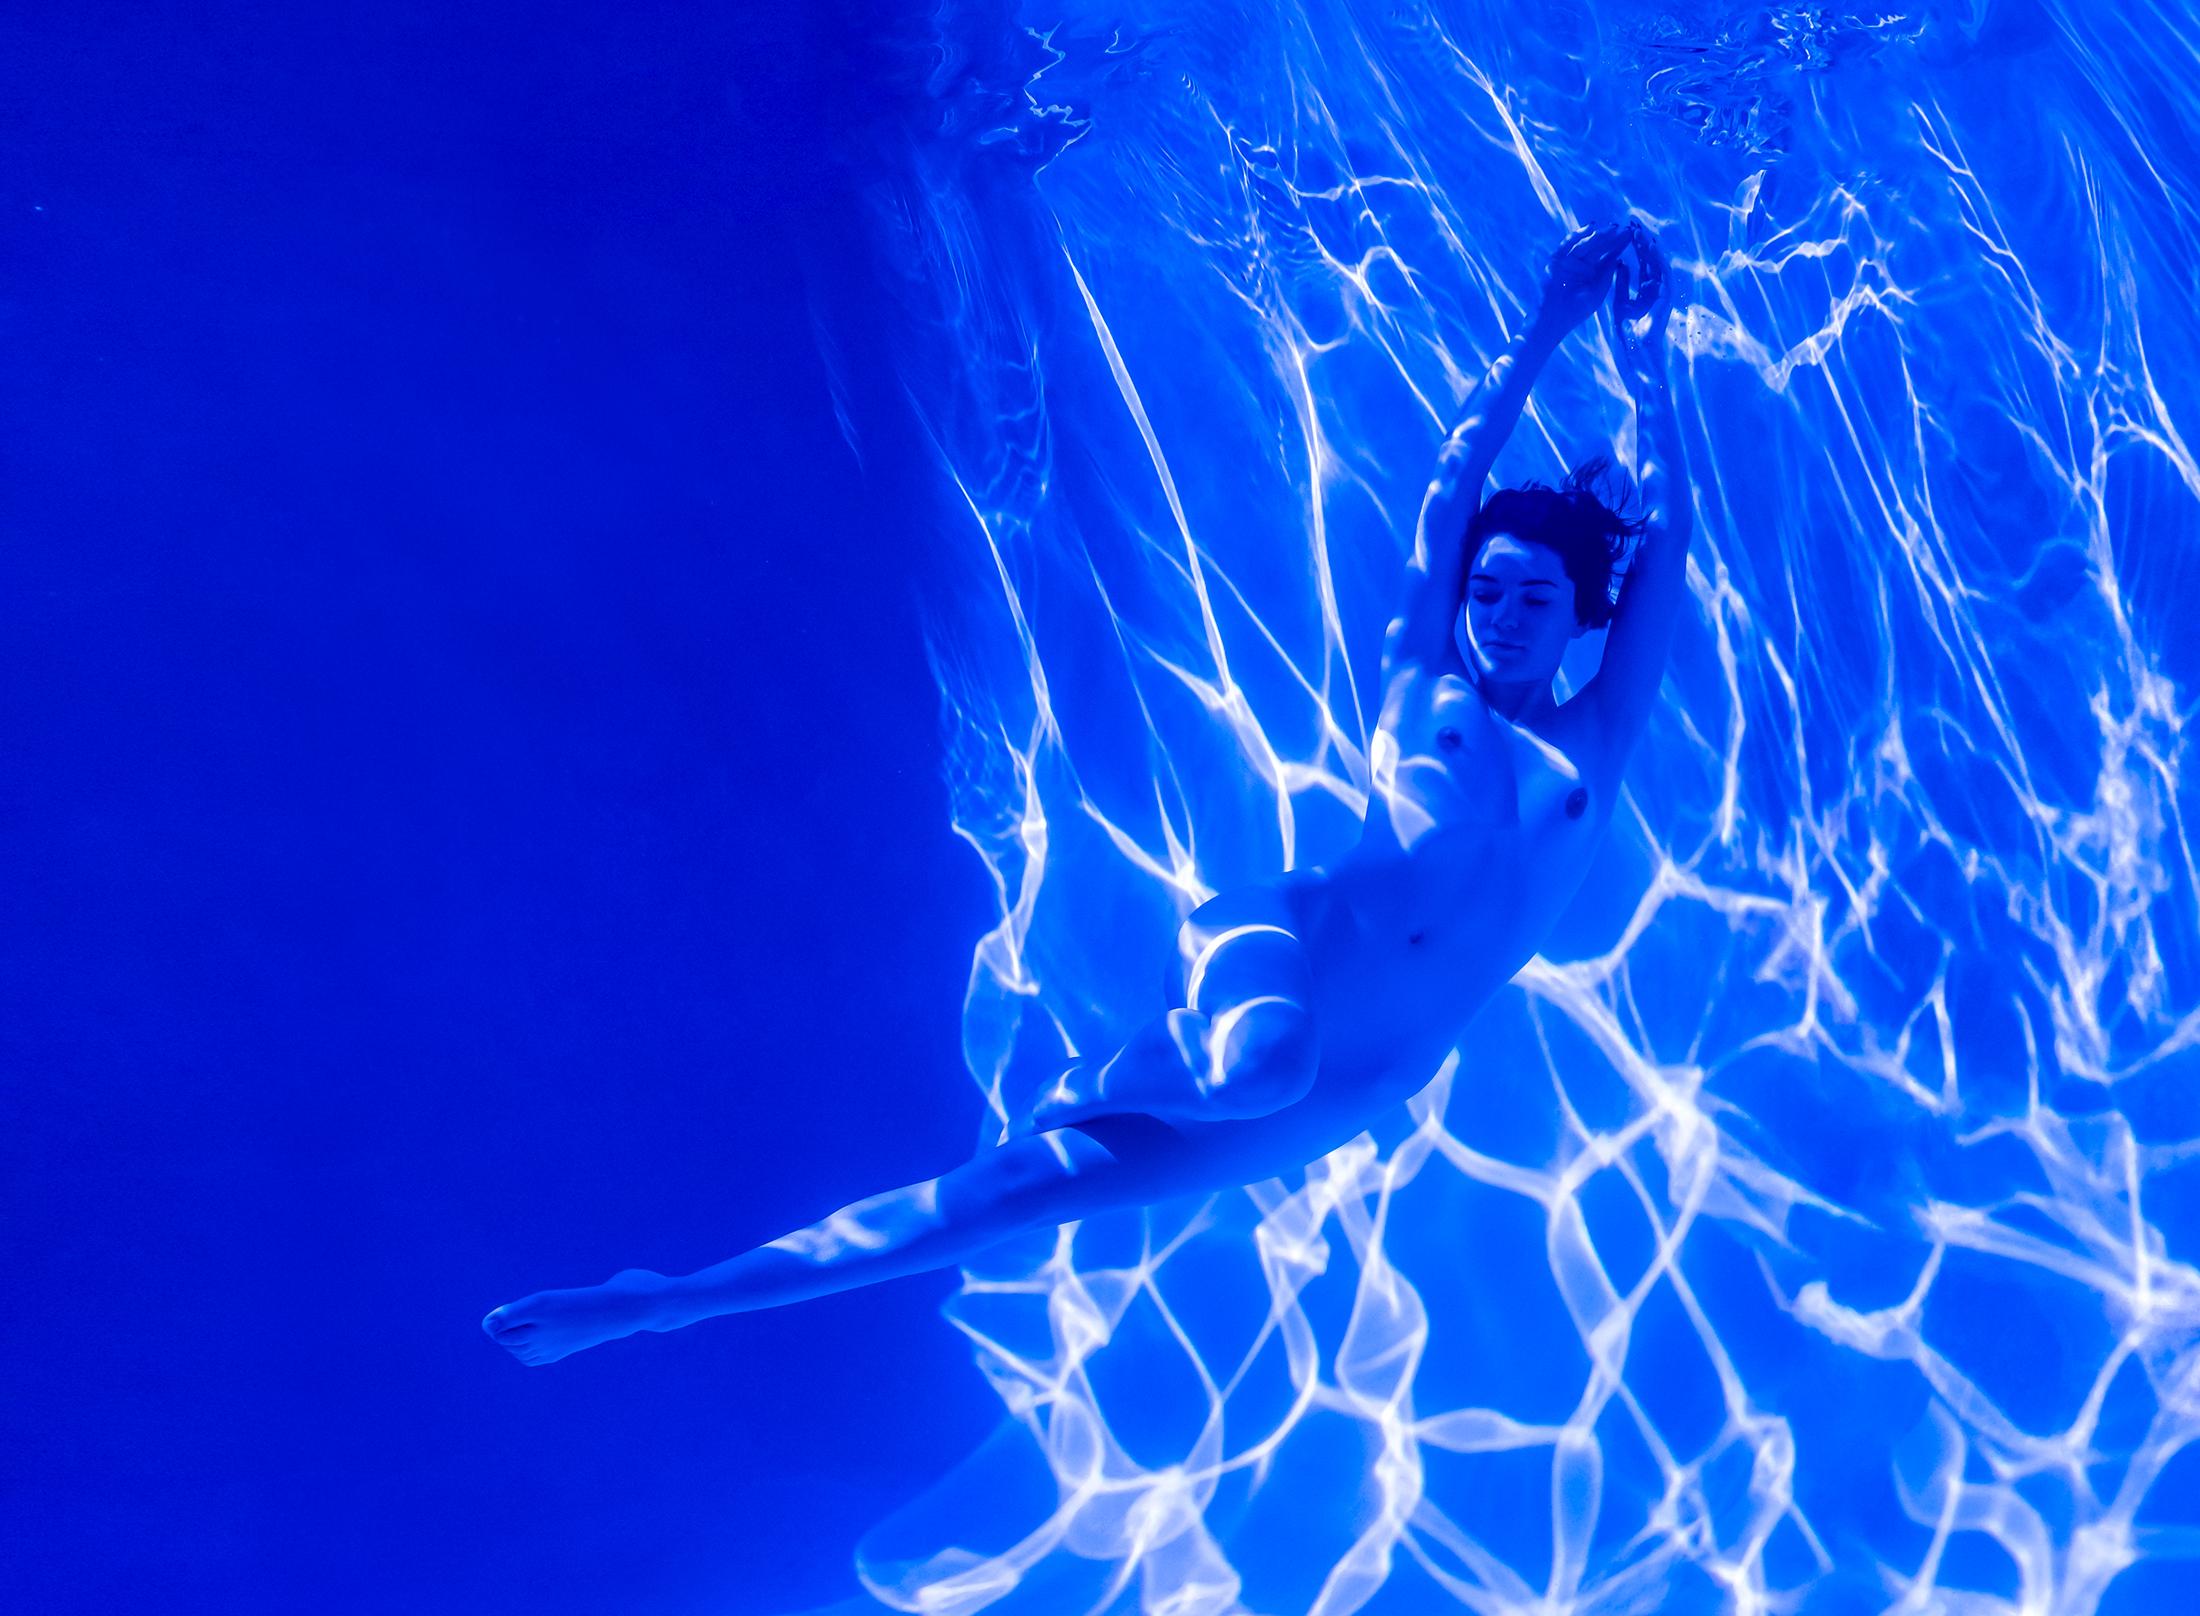 Fluorescence - underwater nude photograph - archival pigment print 26" x 35"